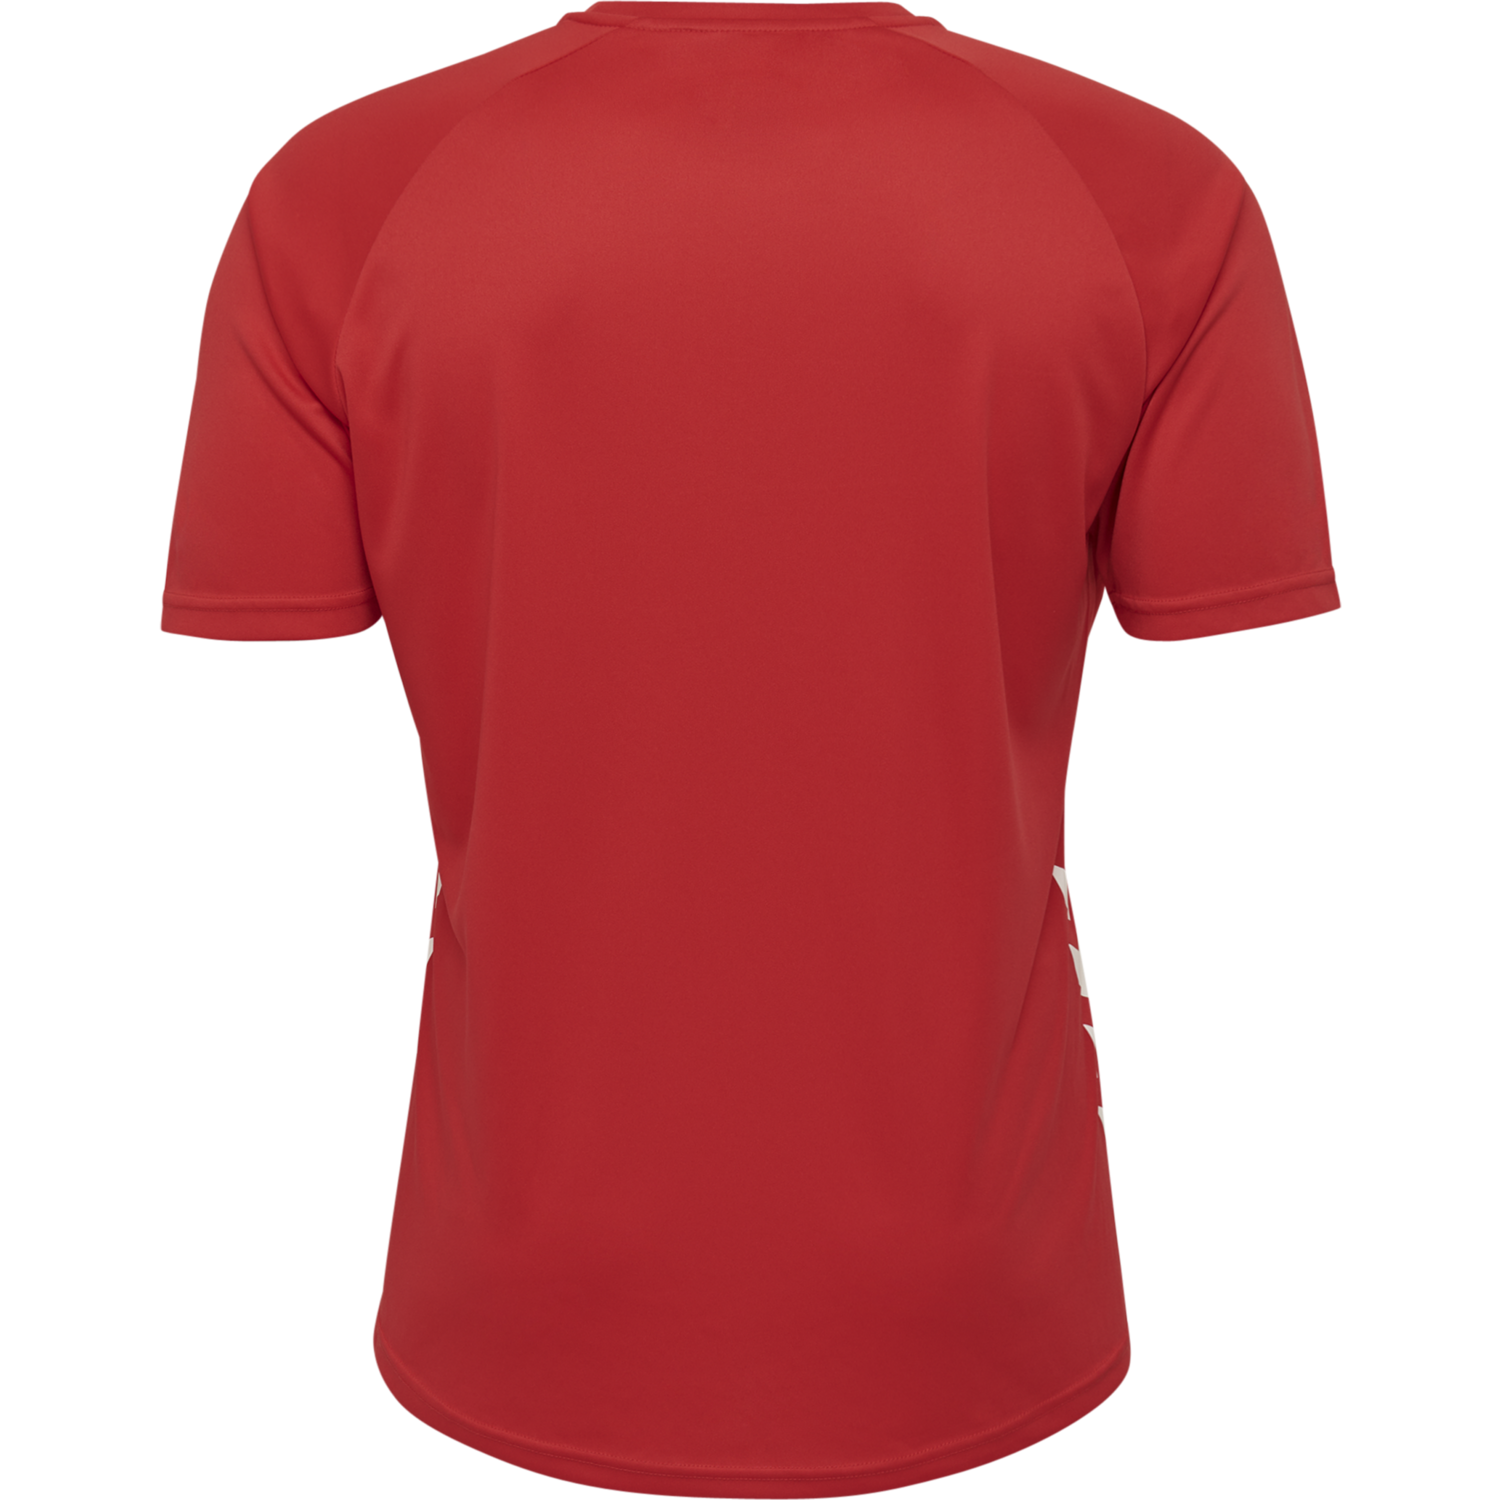 Details about   Hummel Football Soccer Lead Mens Short Sleeve SS Sports Training Jersey Shirt 